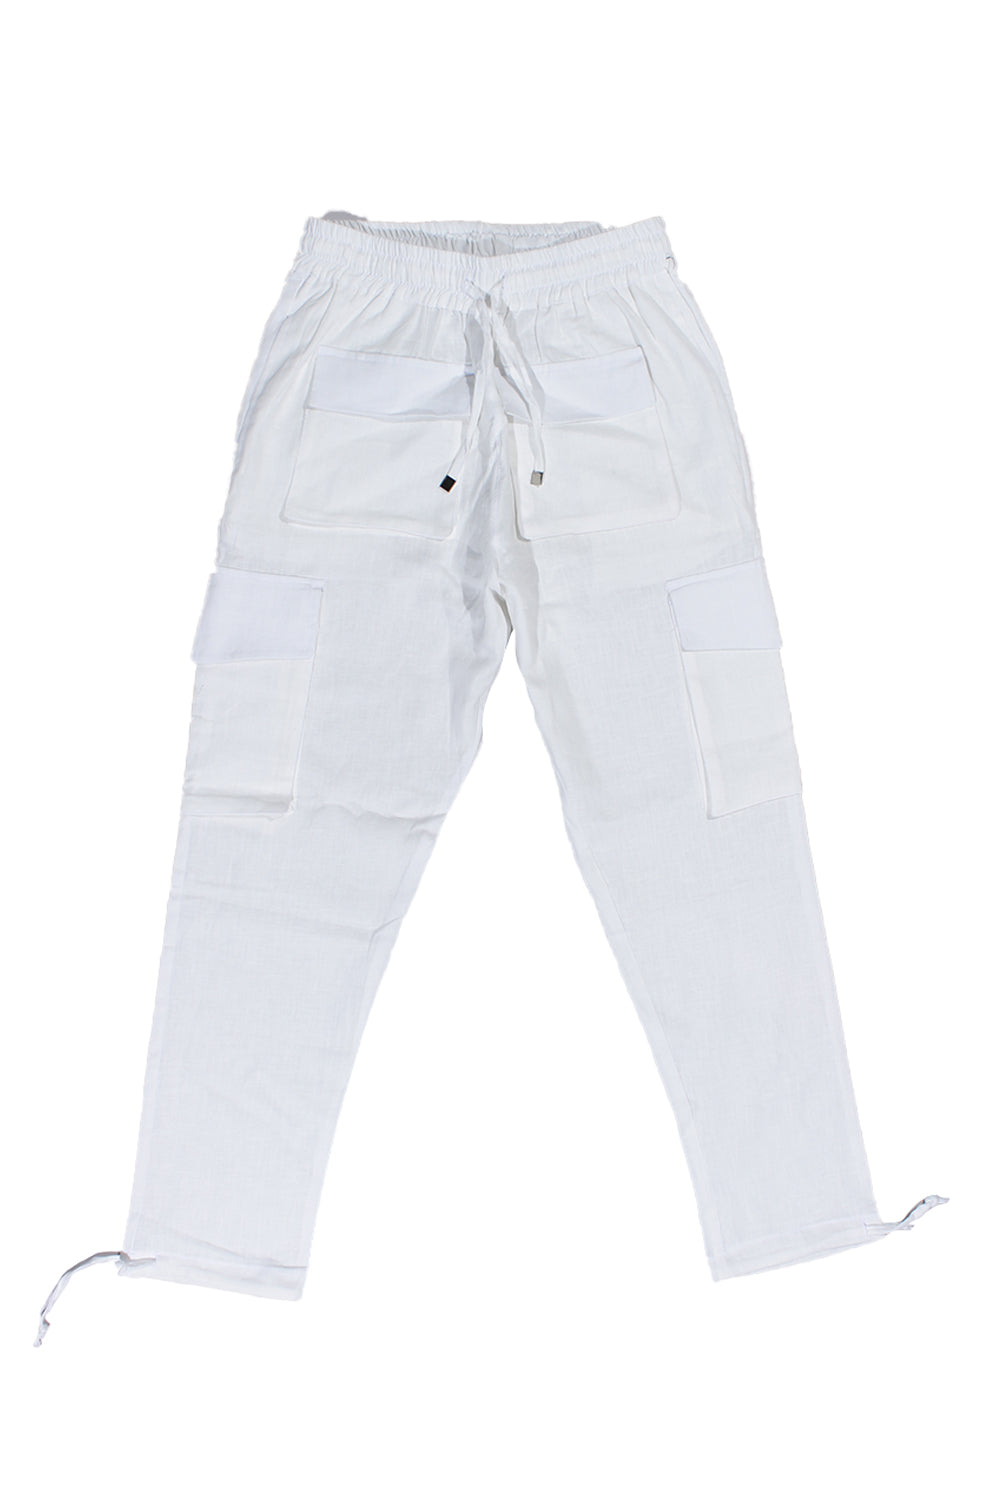 CREW Long Linen Cargo 4 Pockets Pants White